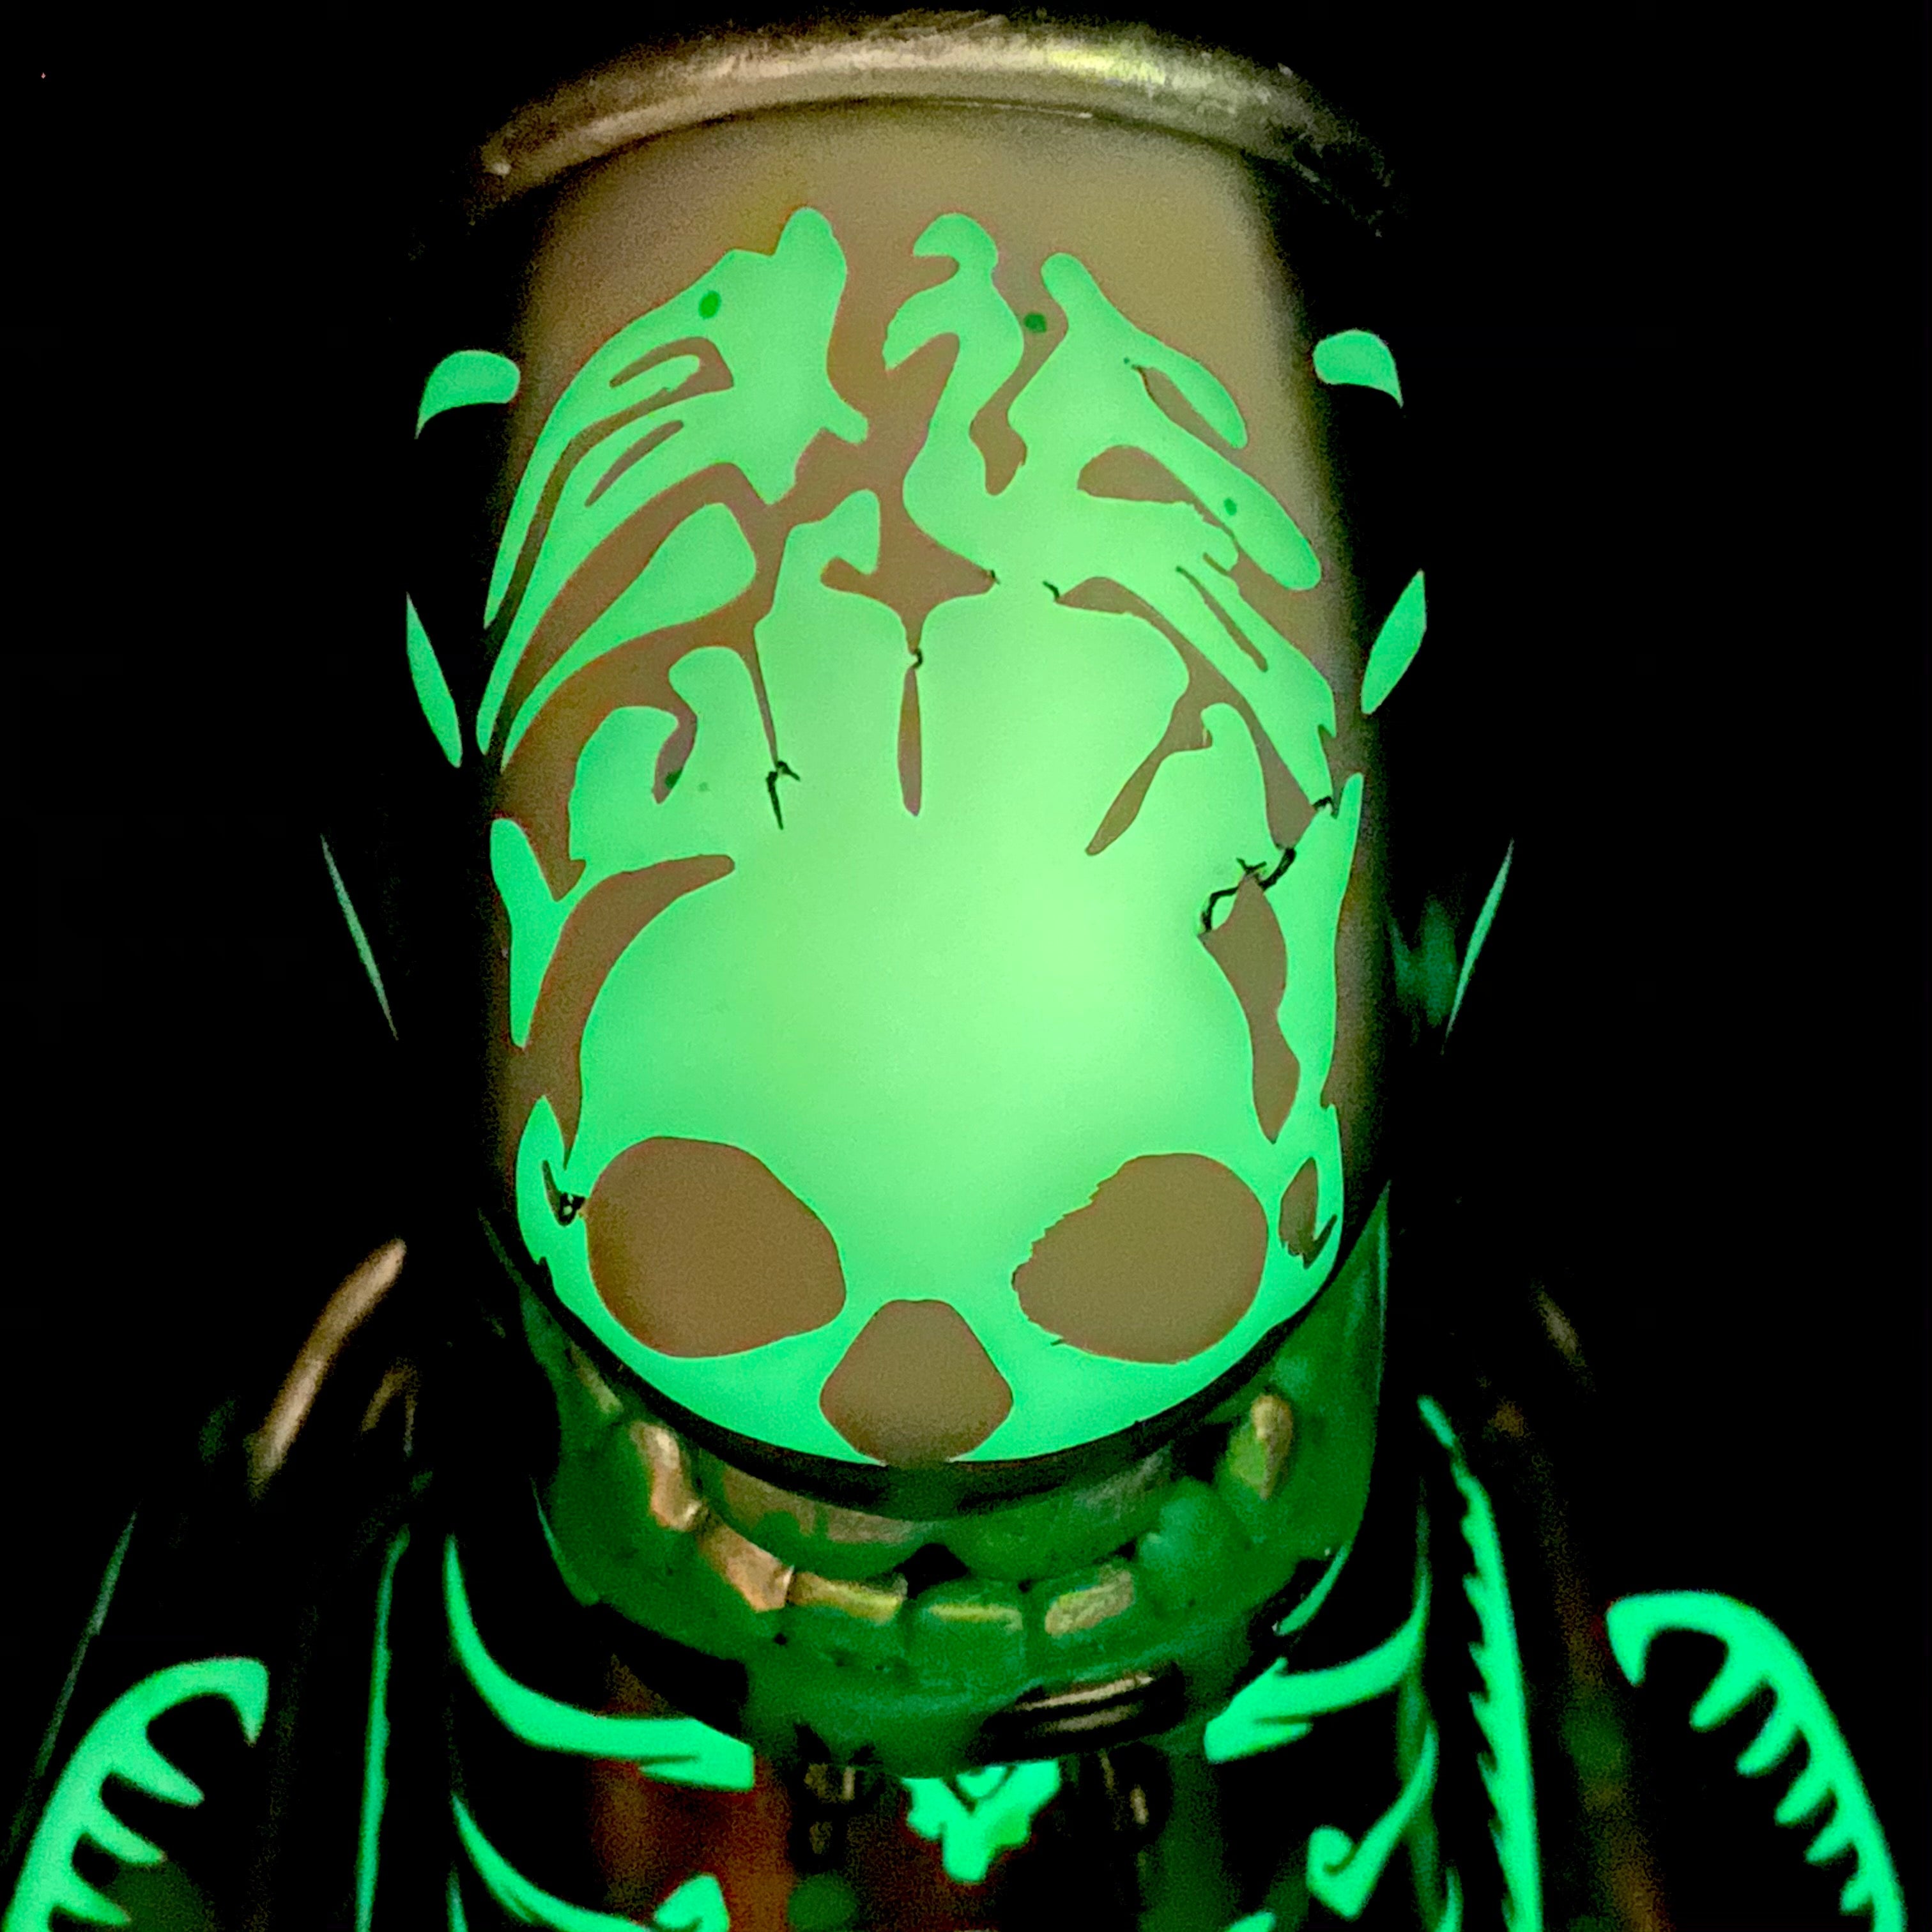 Xeno - Mad Spraycan Mutant Custom